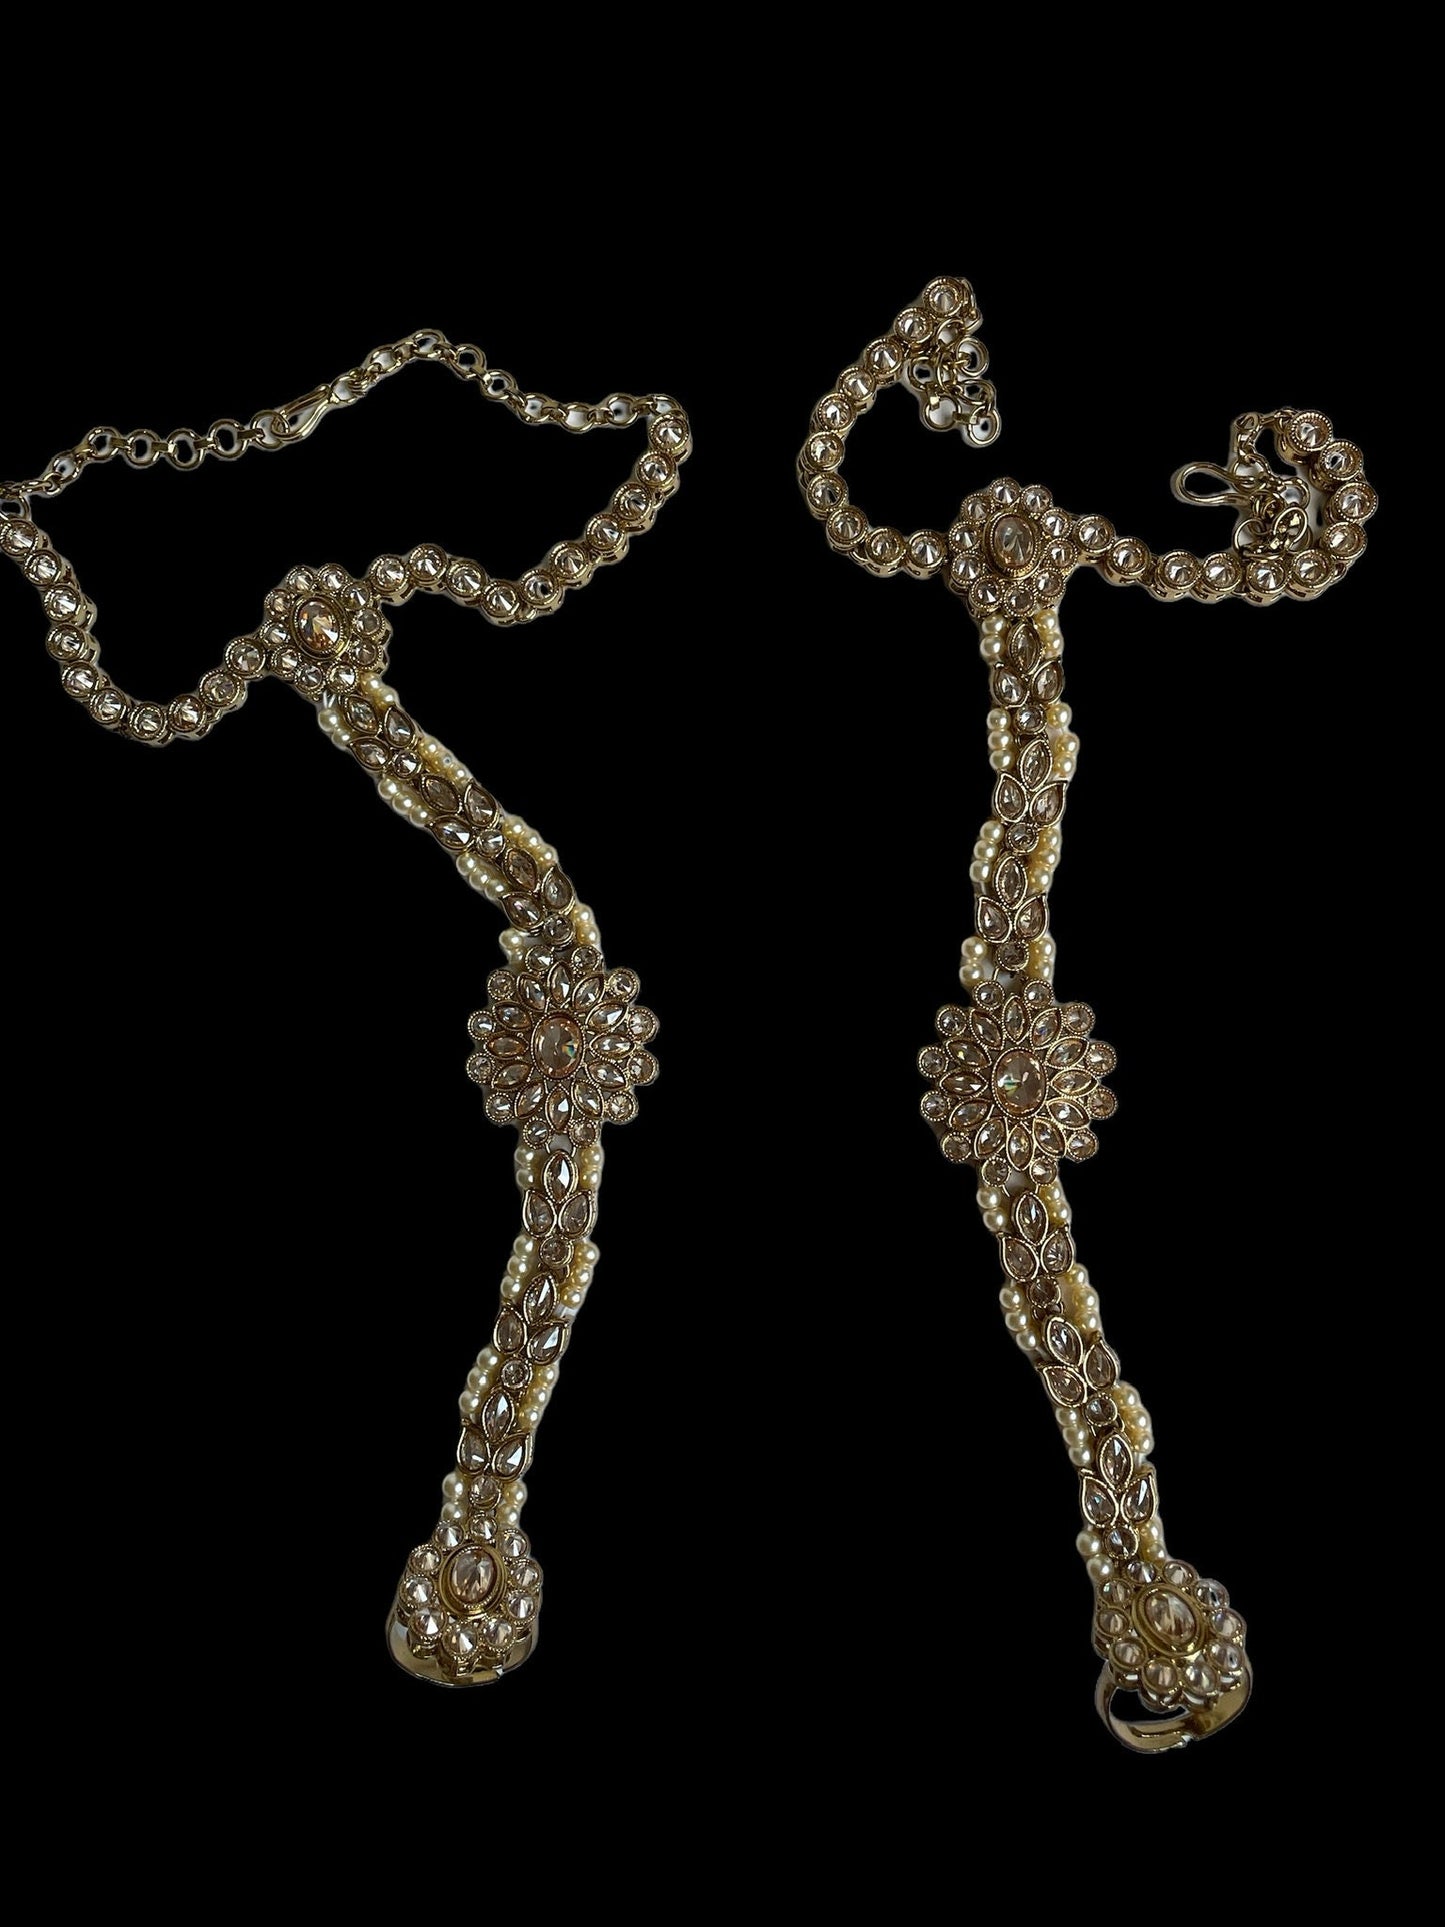 Indian bridal set/antique gold kundan Set/Nikkah jewelry/Indian choker with long necklace/Polki Choker/Sabyasachi necklace with nosering